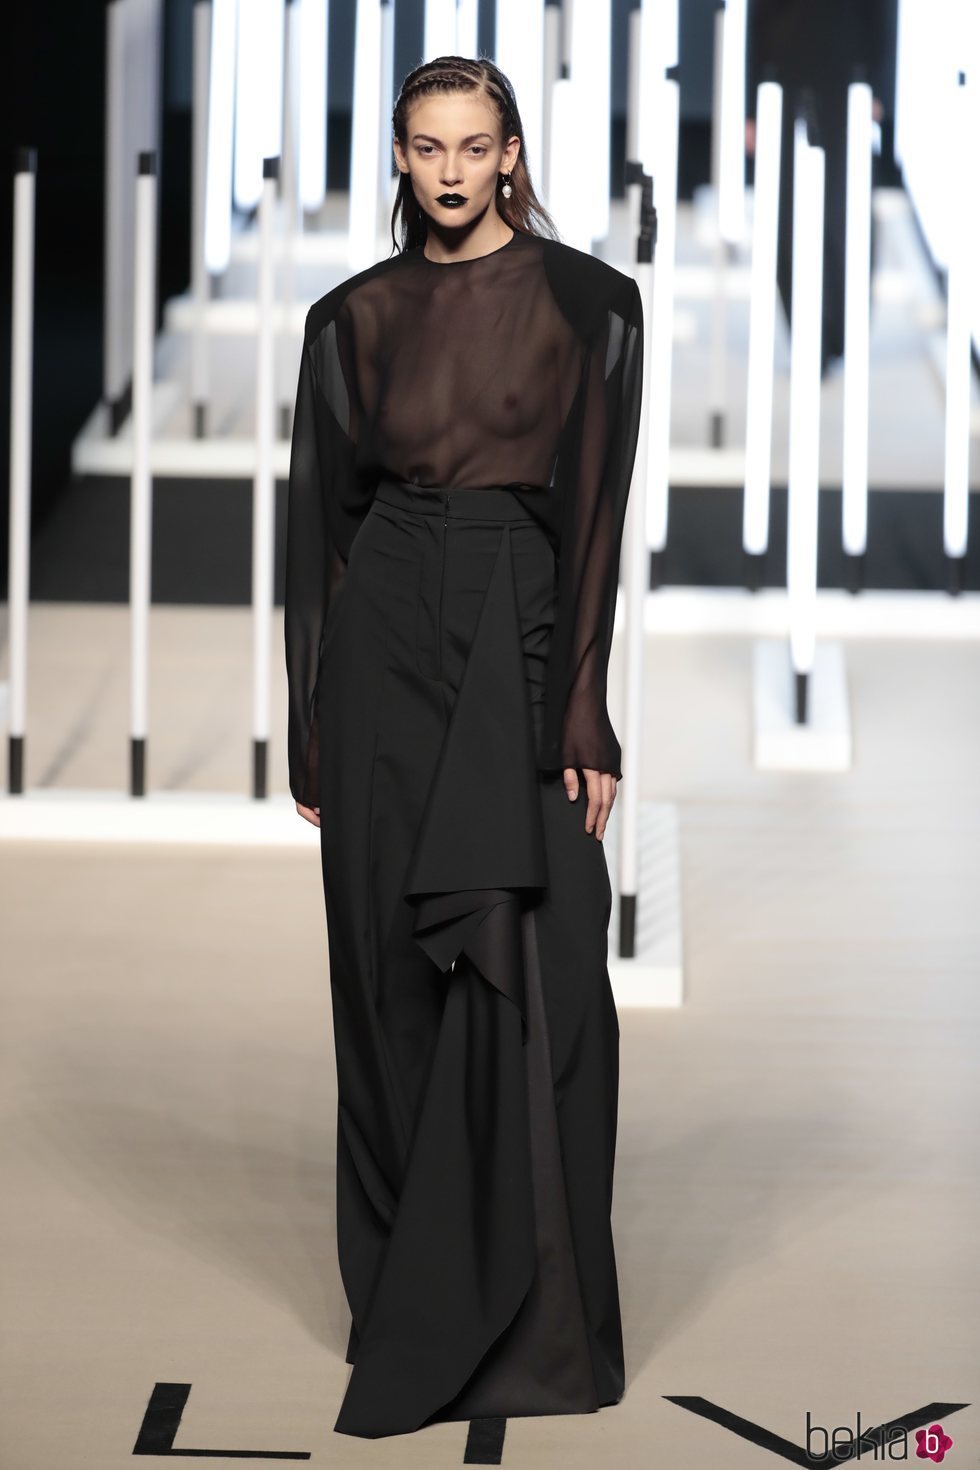 Vestido con transparencias de Juanjo Oliva primavera/verano 2019 en la Madrid Fashion Week